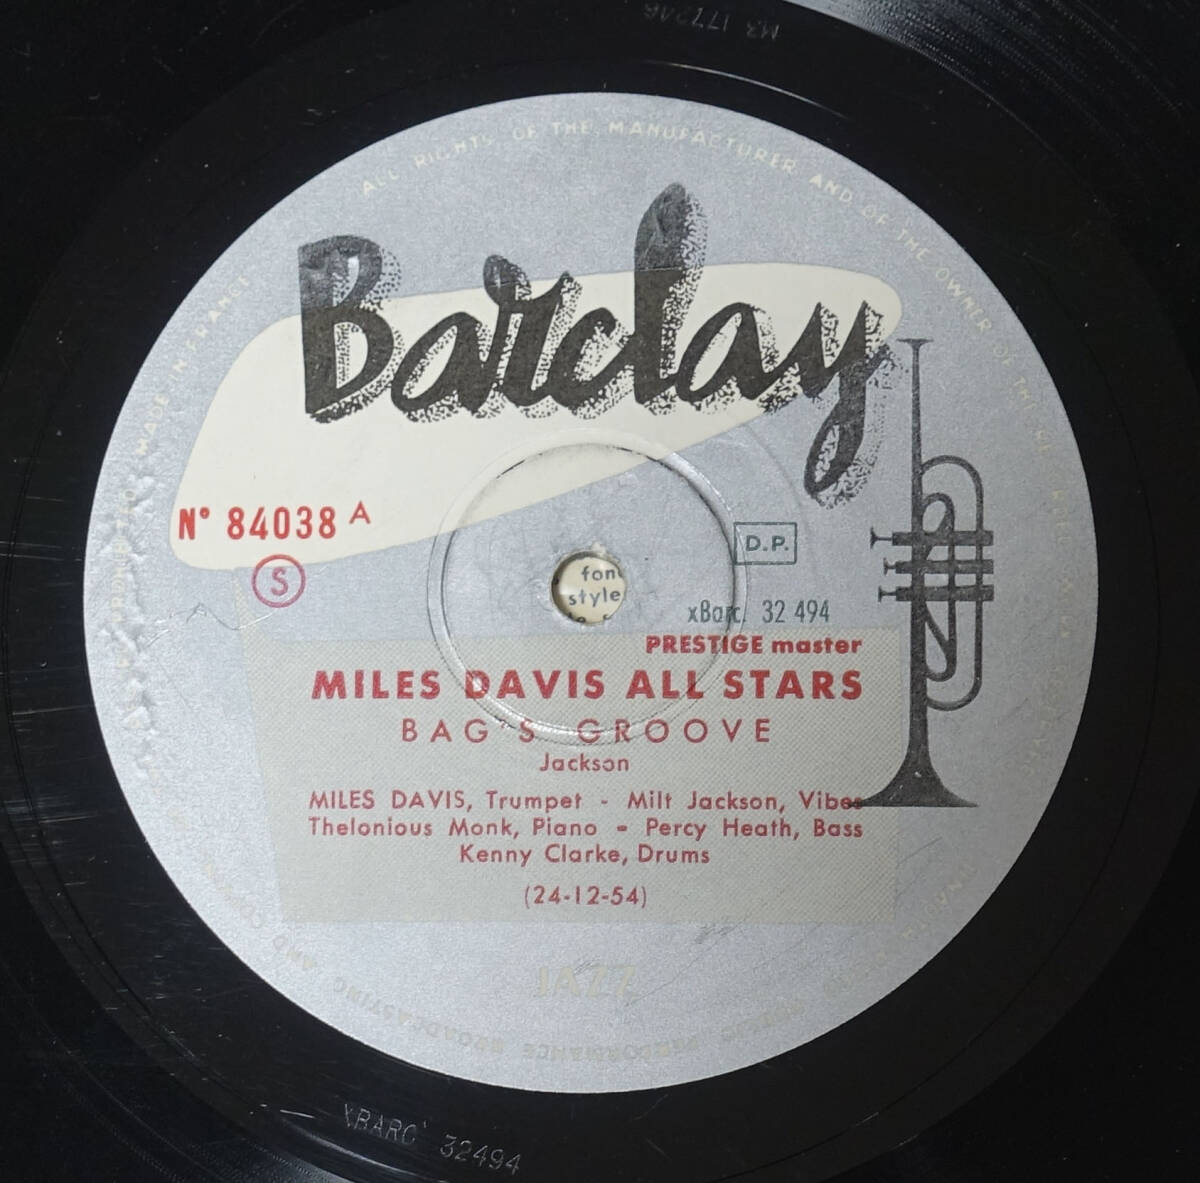 France Barclay オリジナル Bag’s Groove / Miles Davis All Stars_画像3